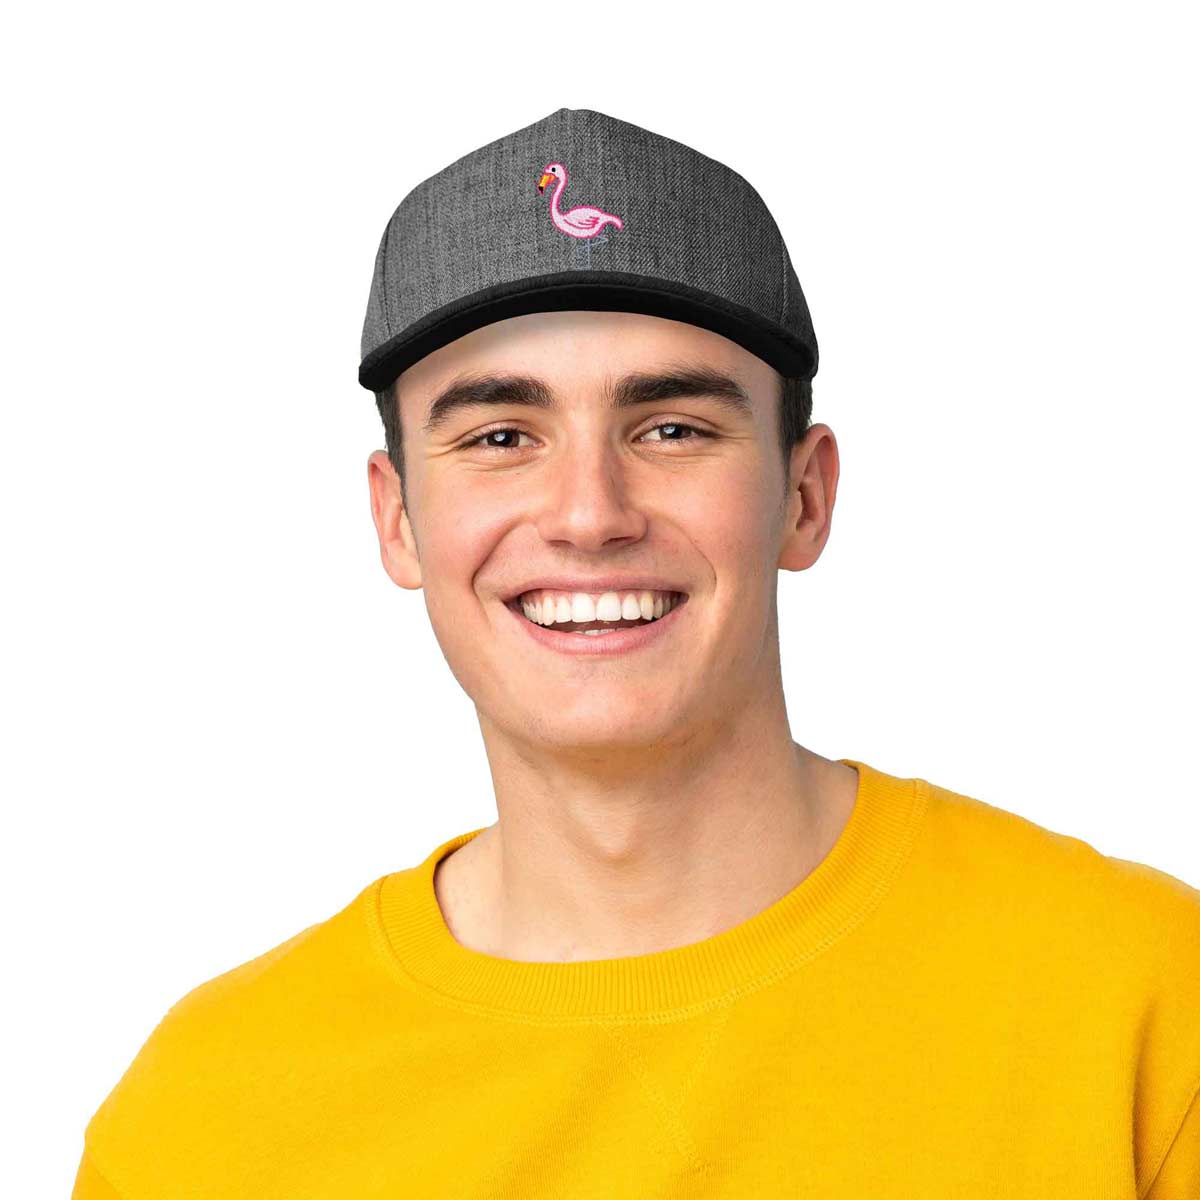 Dalix Flamingo Snapback Flat Bill Baseball Hat Embroidered Cap Mens in Light Gray